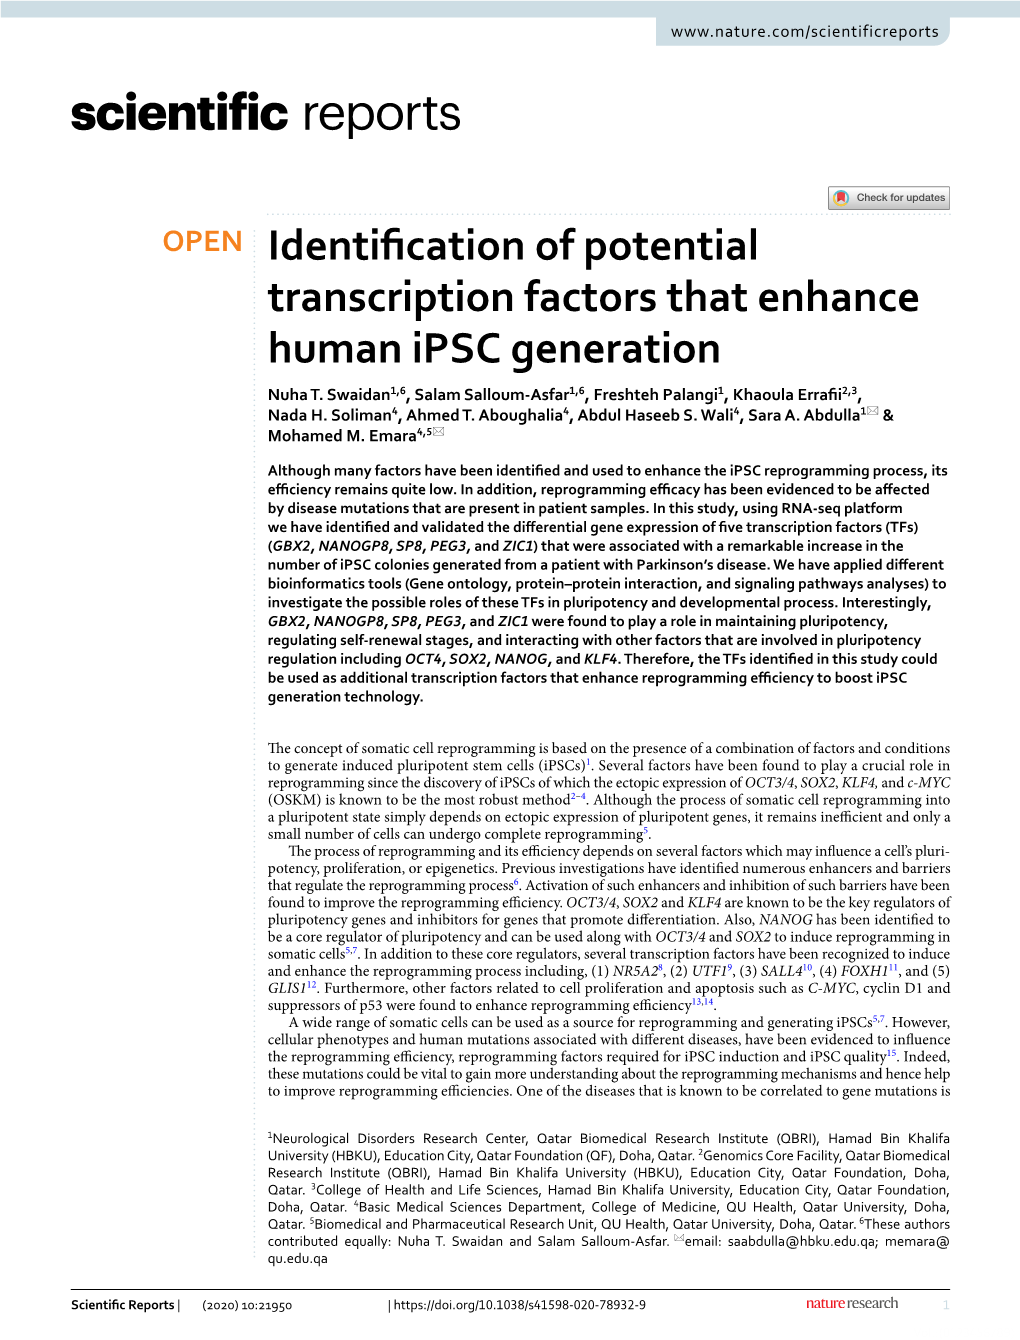 Identification of Potential Transcription Factors That Enhance Human Ipsc